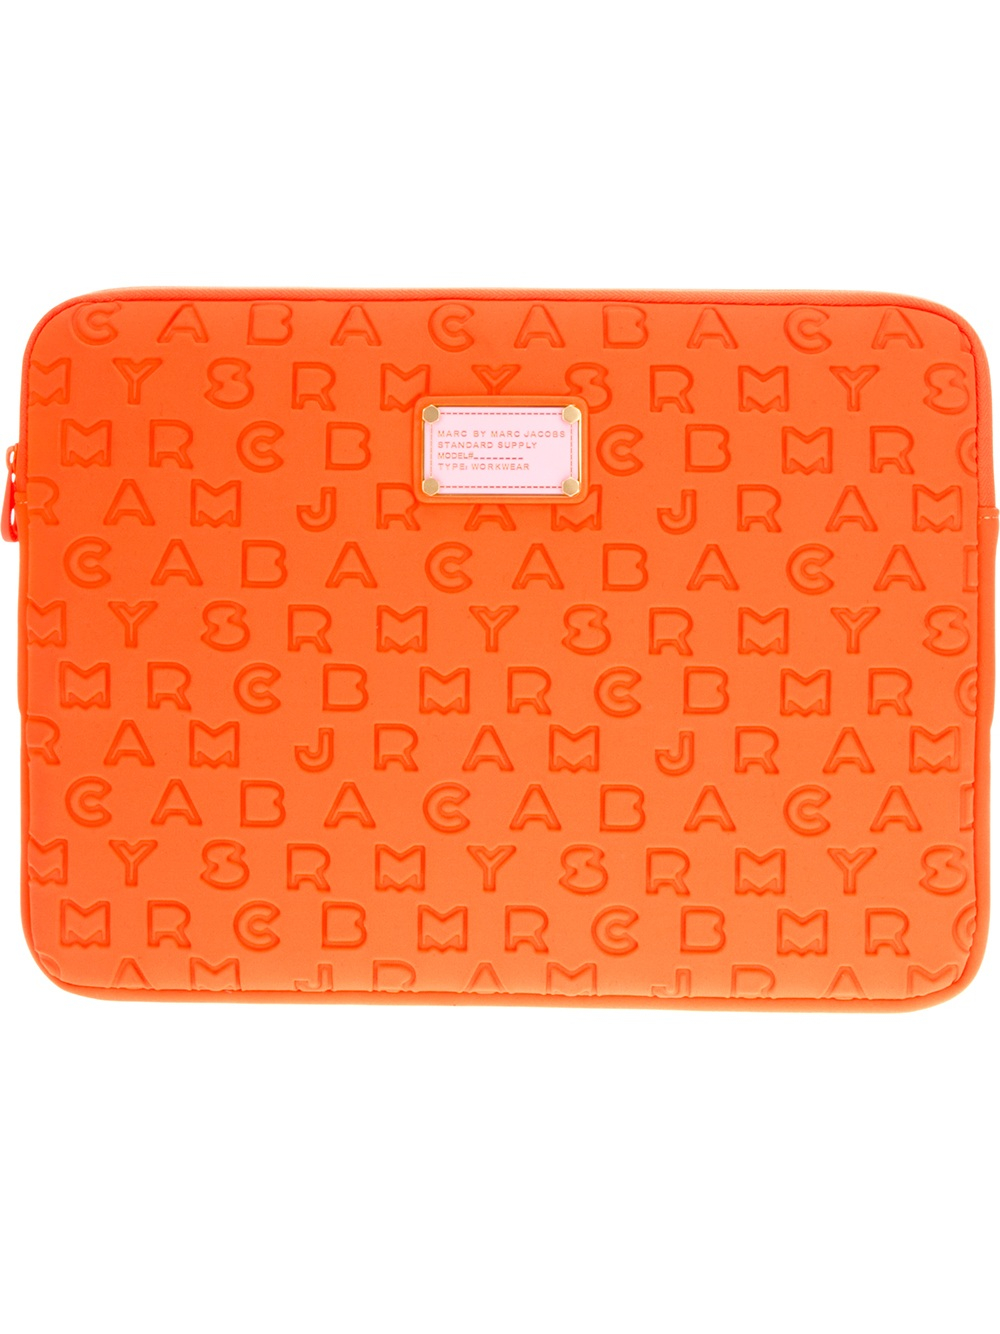 Marc By Marc Jacobs Brand Embossed 13 Laptop Sleeve in Yellow & Orange  (Orange) | Lyst